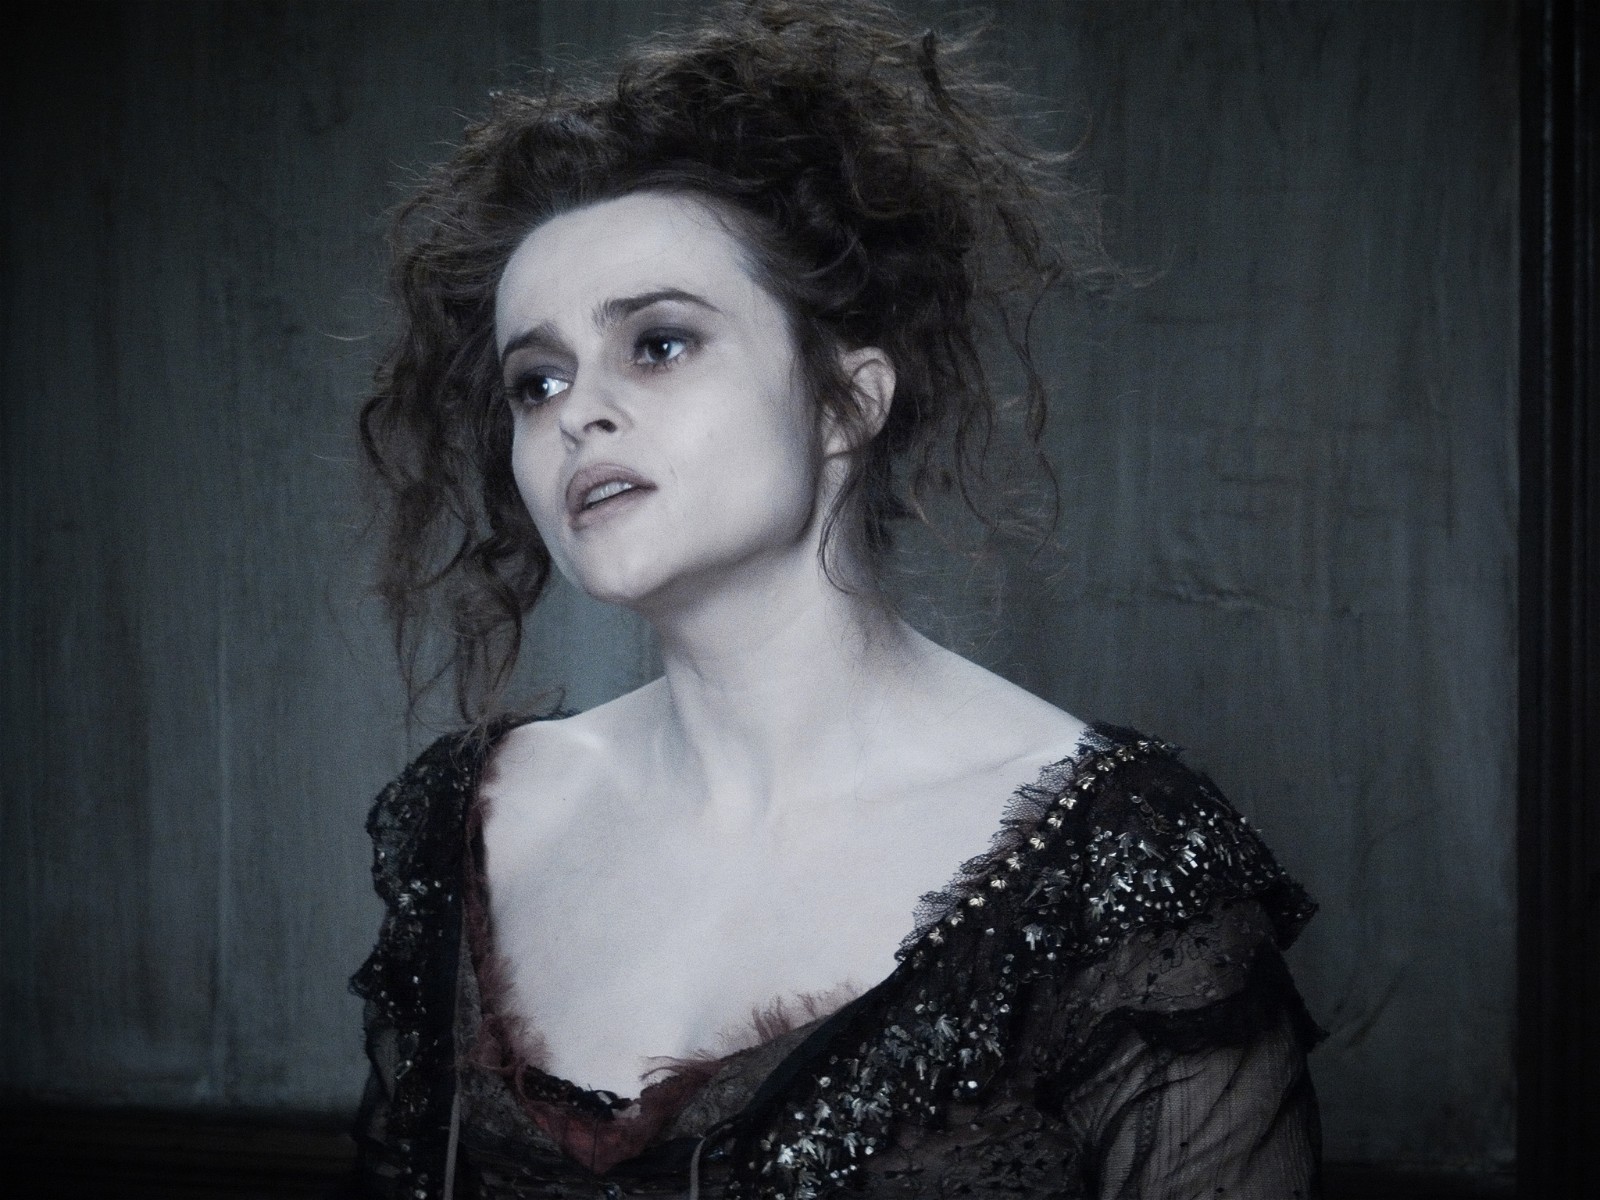 Helena Bonham Carter as Mrs. Lovett in a still from Sweeney Todd: The Demon Barber of Fleet Street 